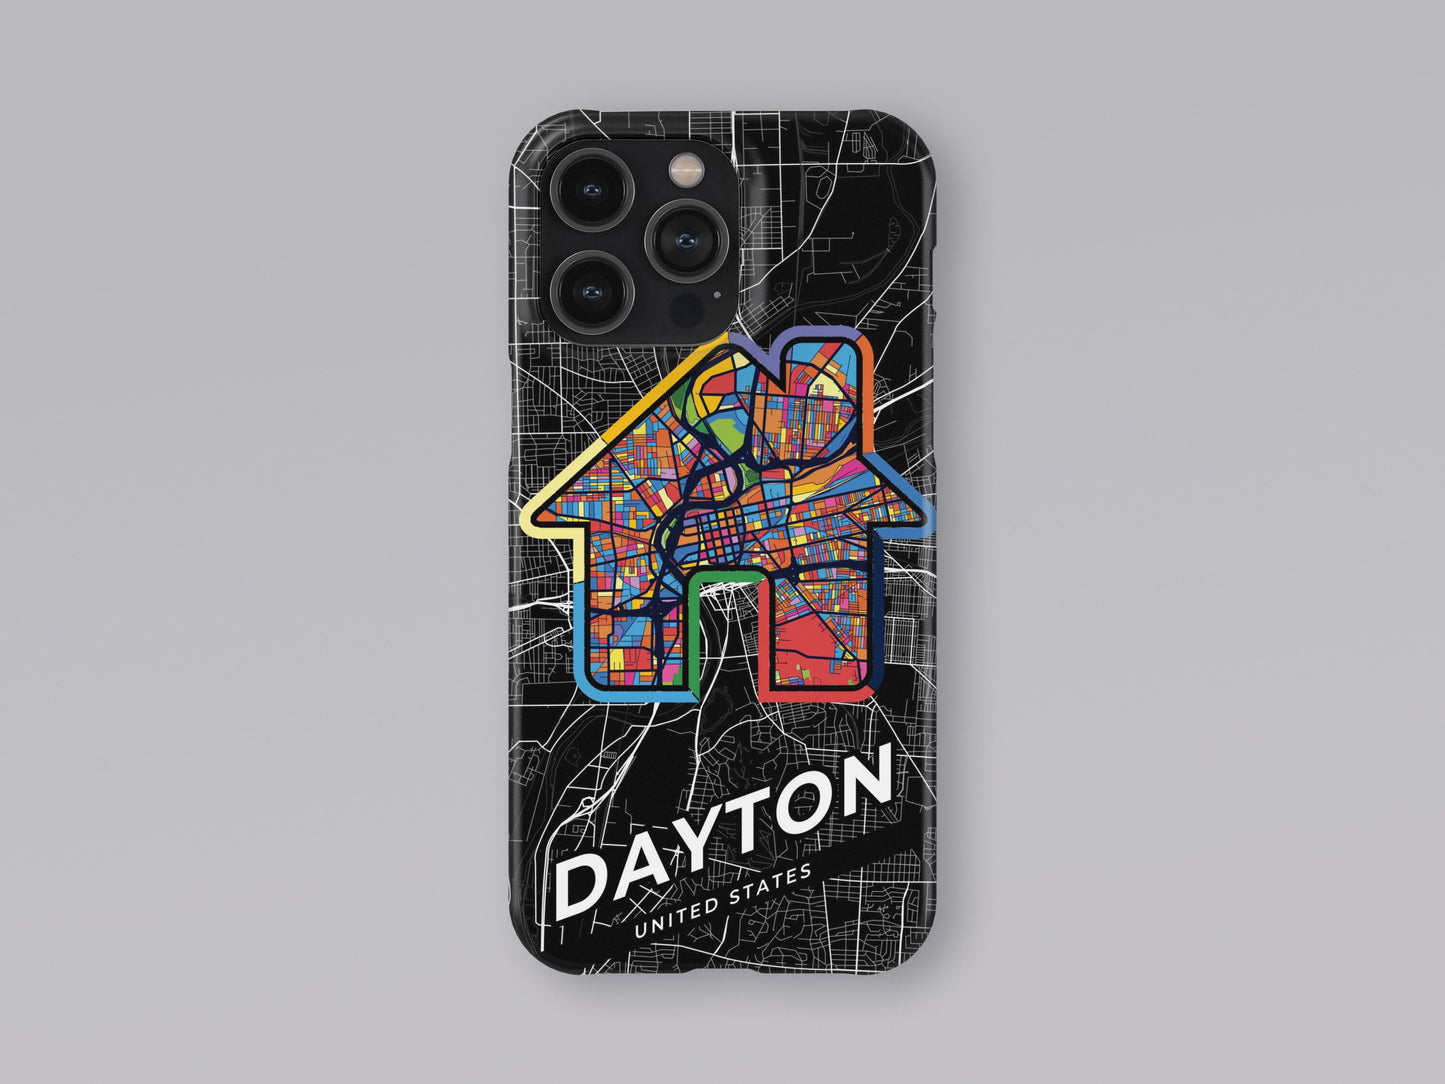 Dayton Ohio slim phone case with colorful icon. Birthday, wedding or housewarming gift. Couple match cases. 3